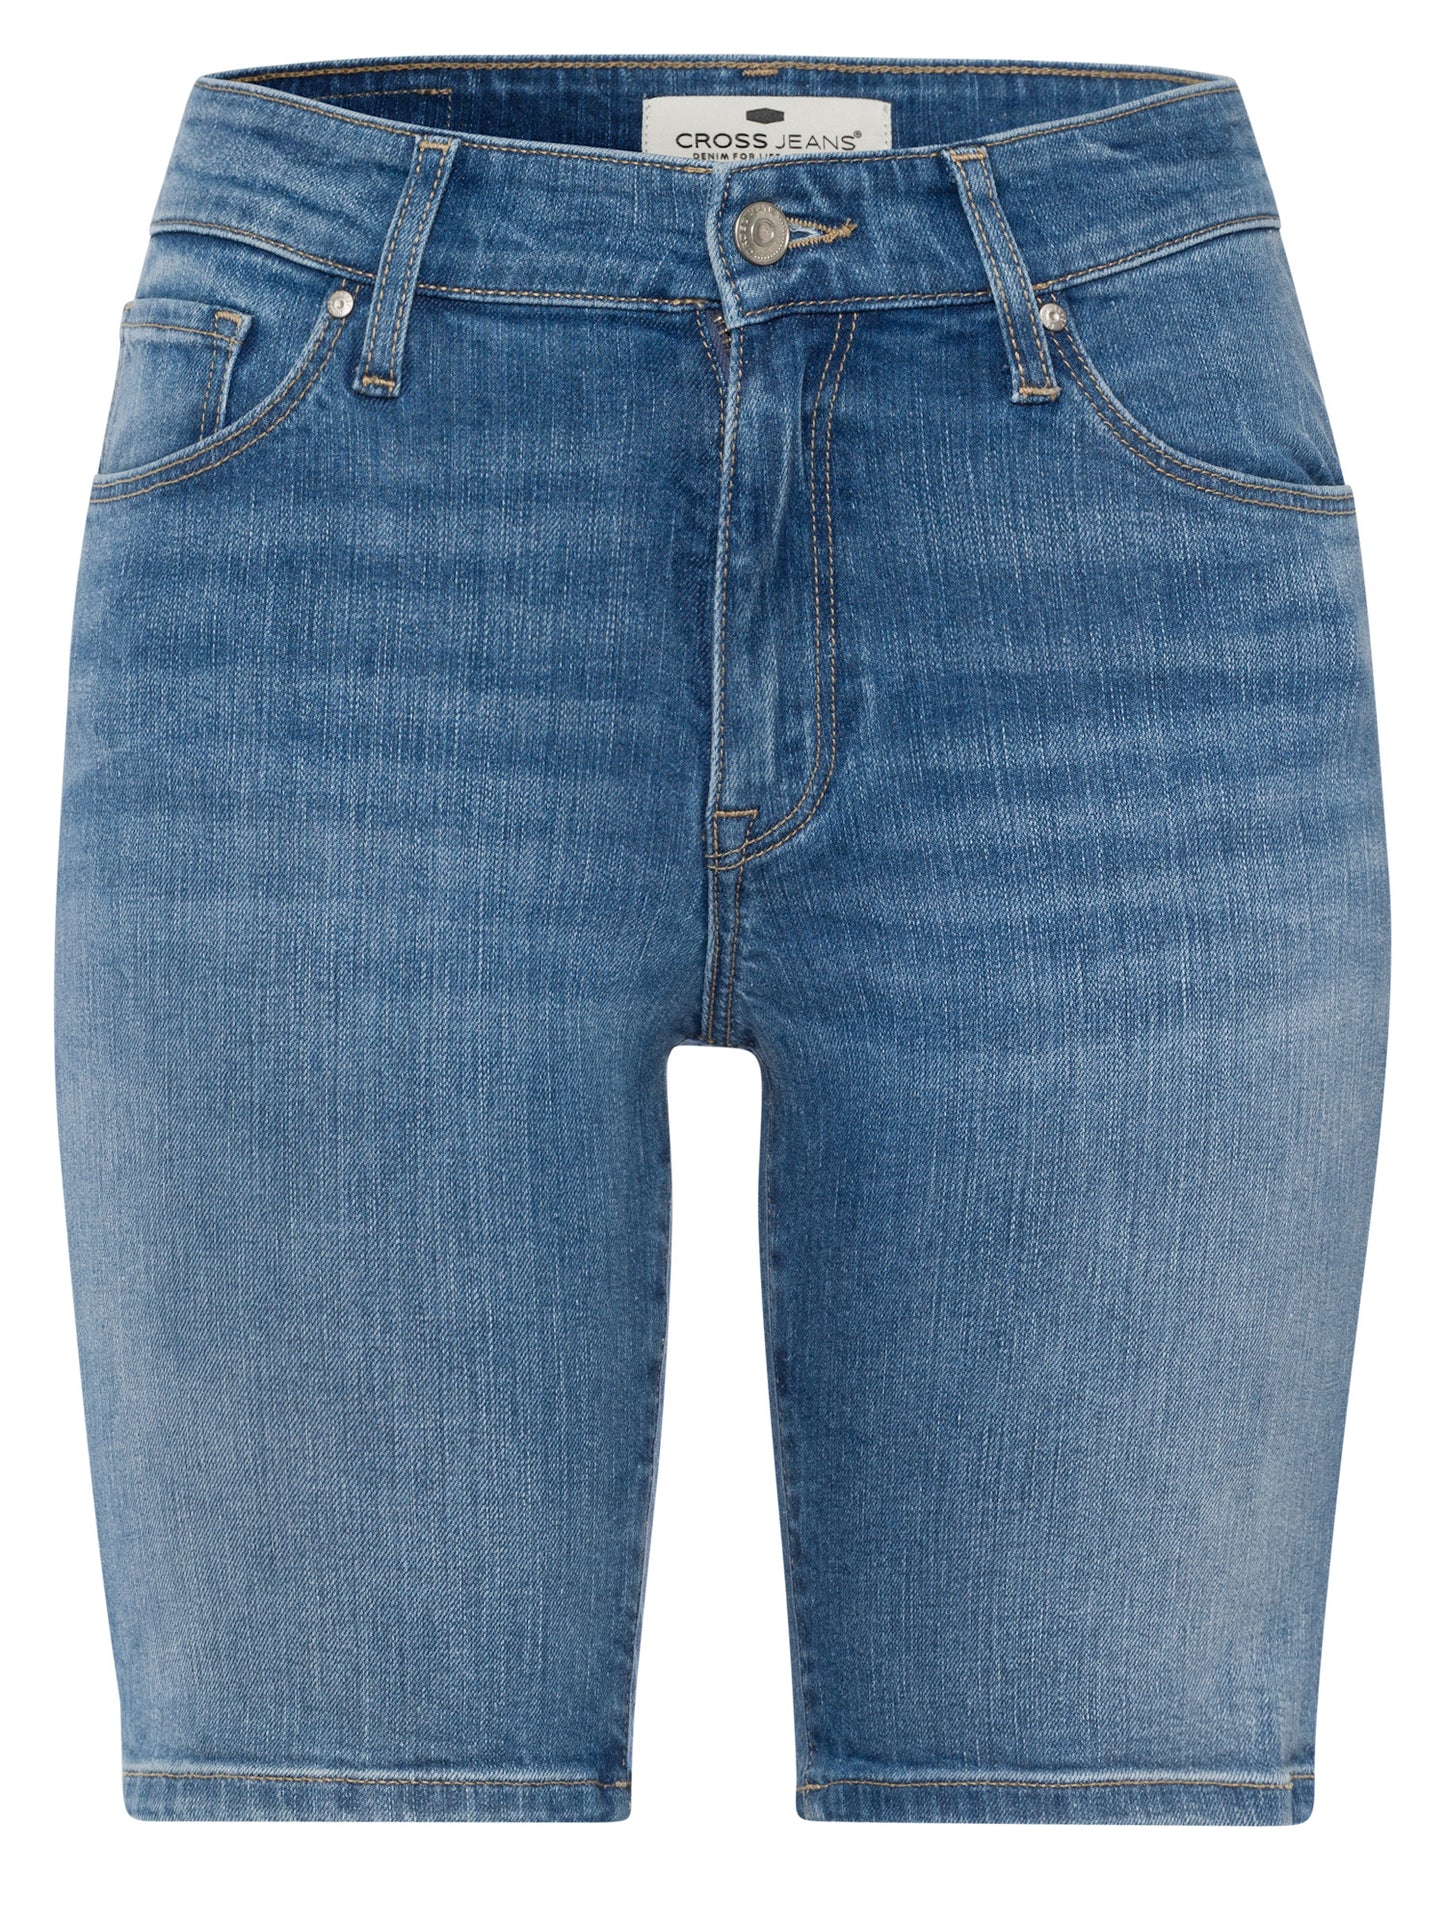 Women's Jeans Shorts Anya Slim Fit High Waist medium blue